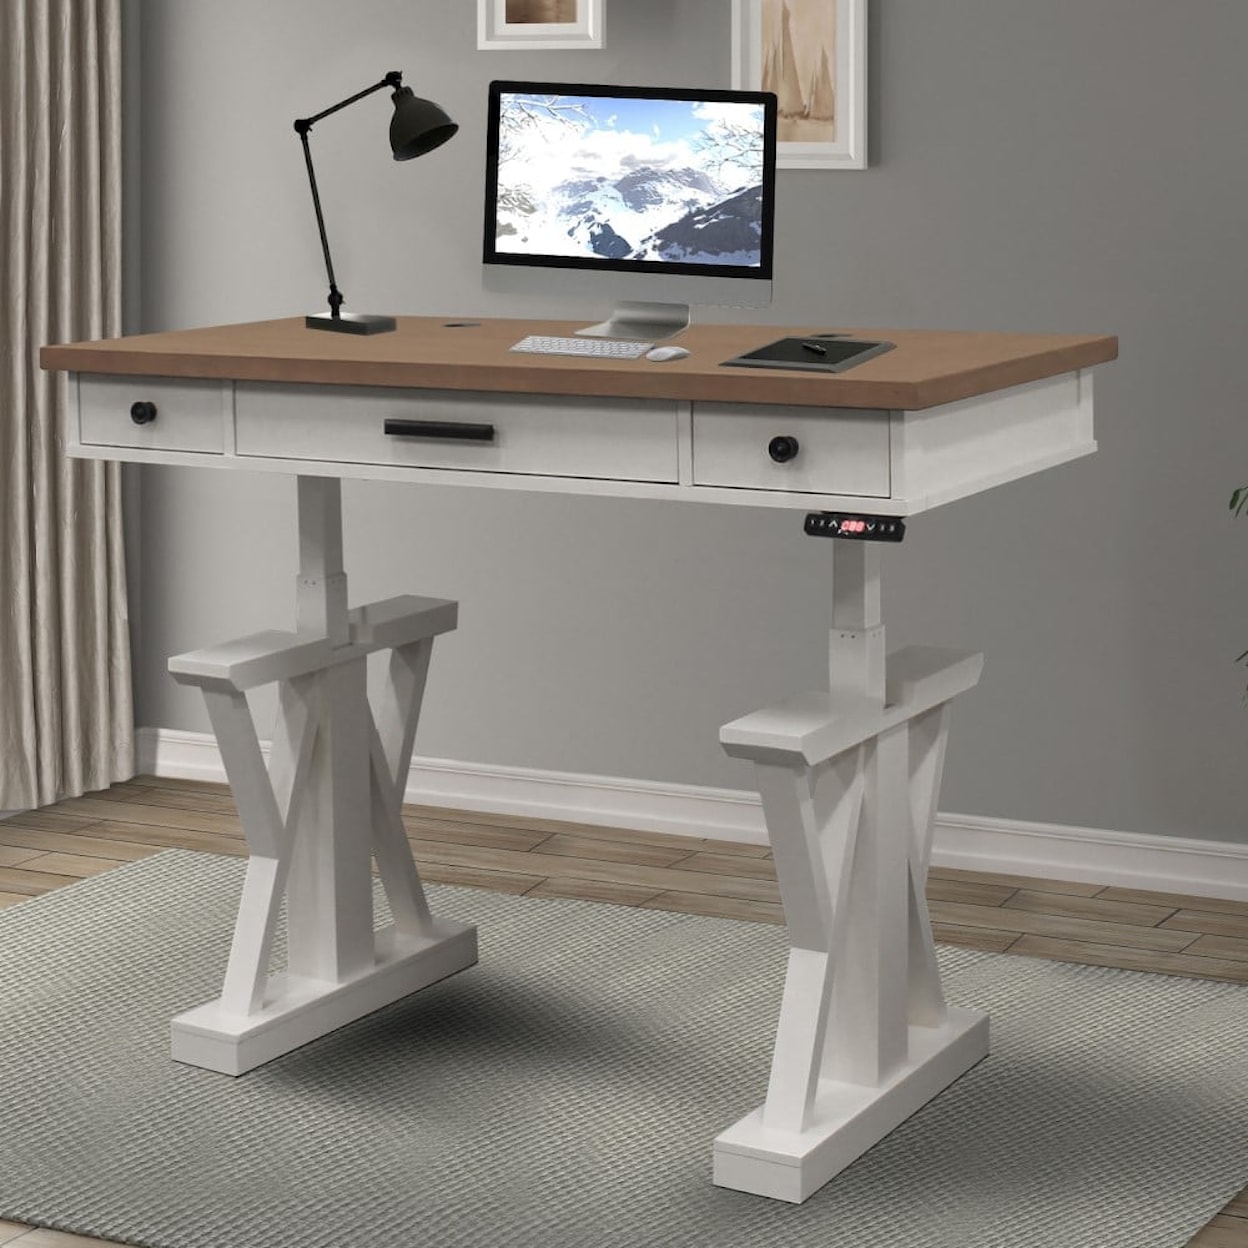 Paramount Furniture Americana Modern Table Desks/Writing Desks